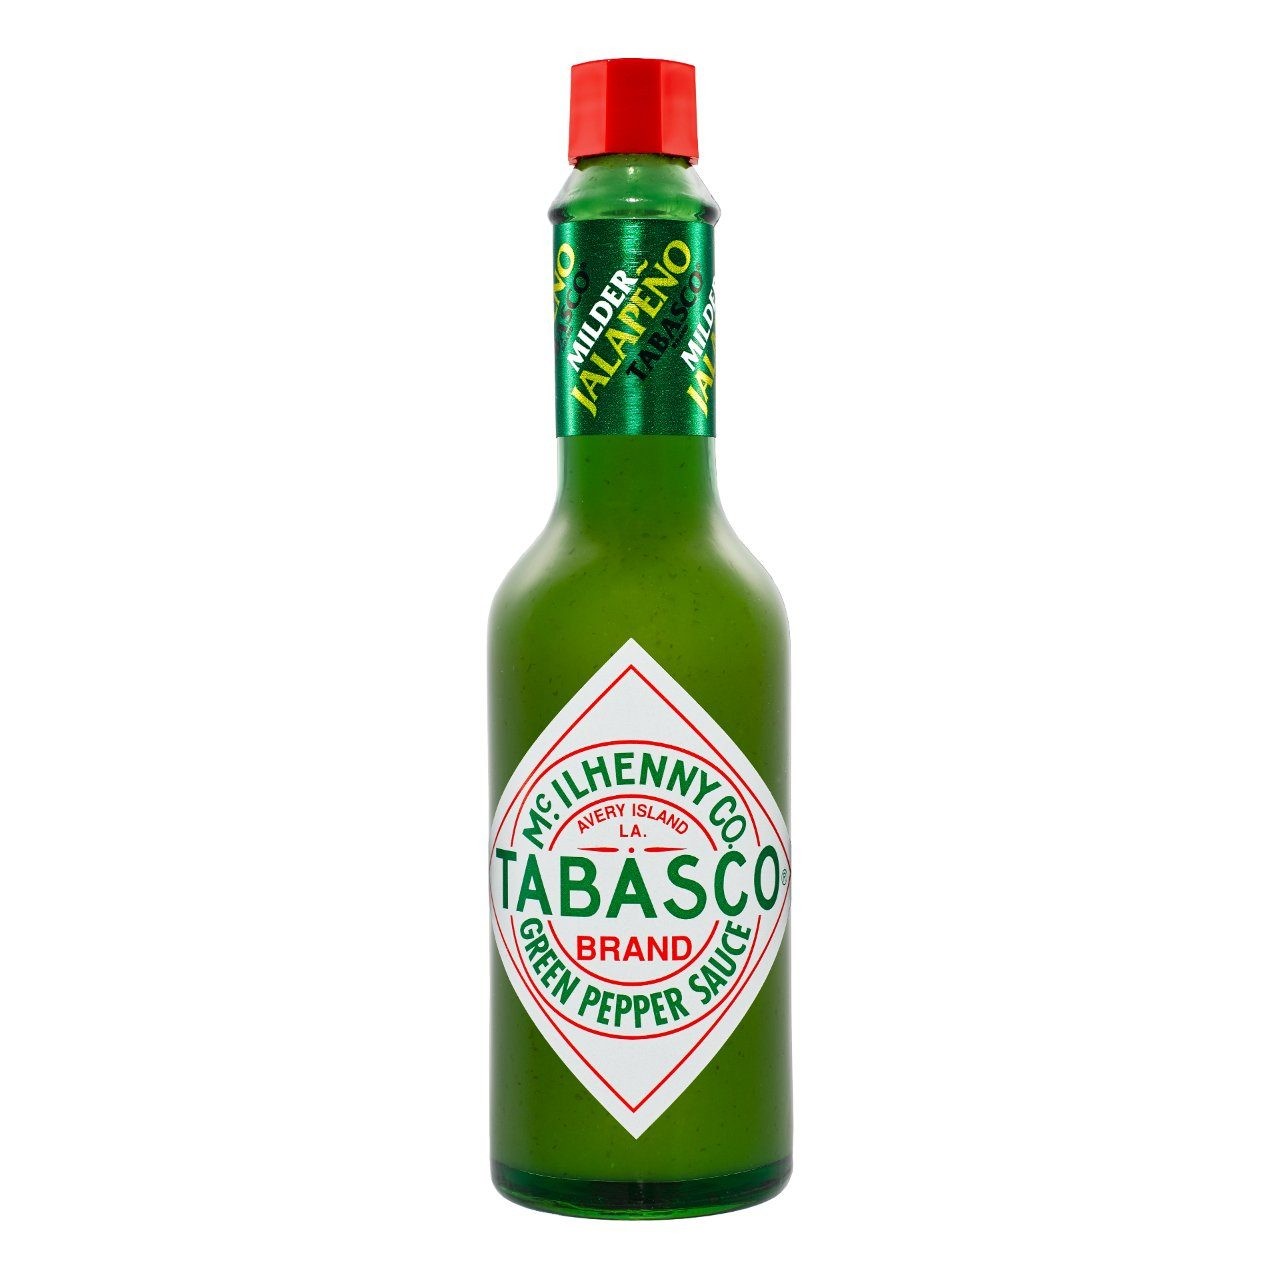 Tabasco pepersaus groen